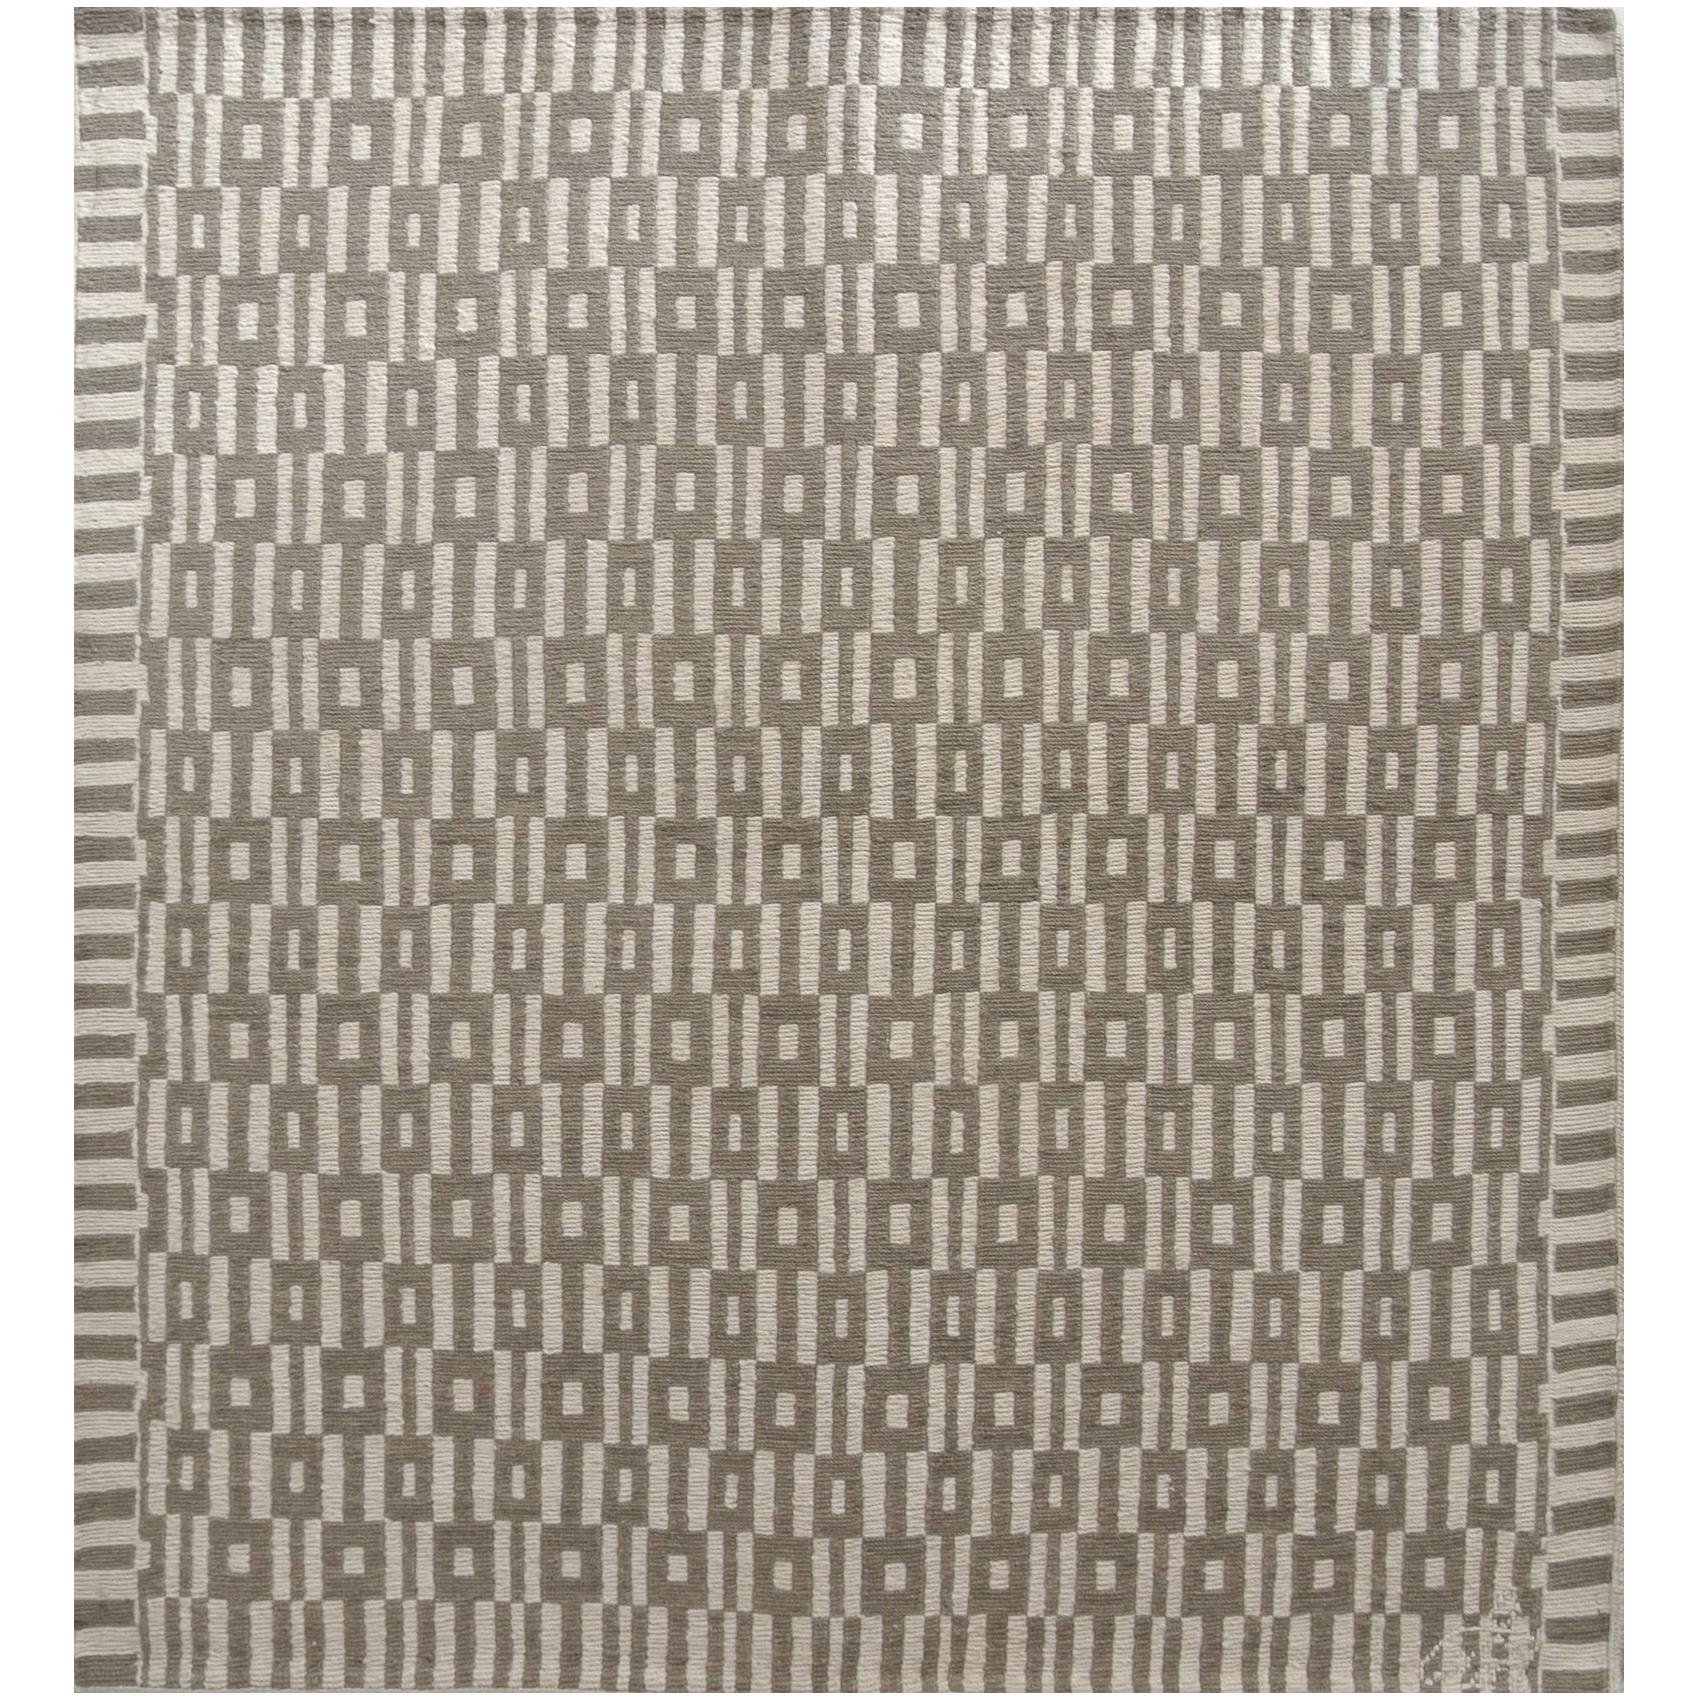 Orley Shabahang "Windows" Wool Persian Carpet, Gray and Cream, 3' x 4'